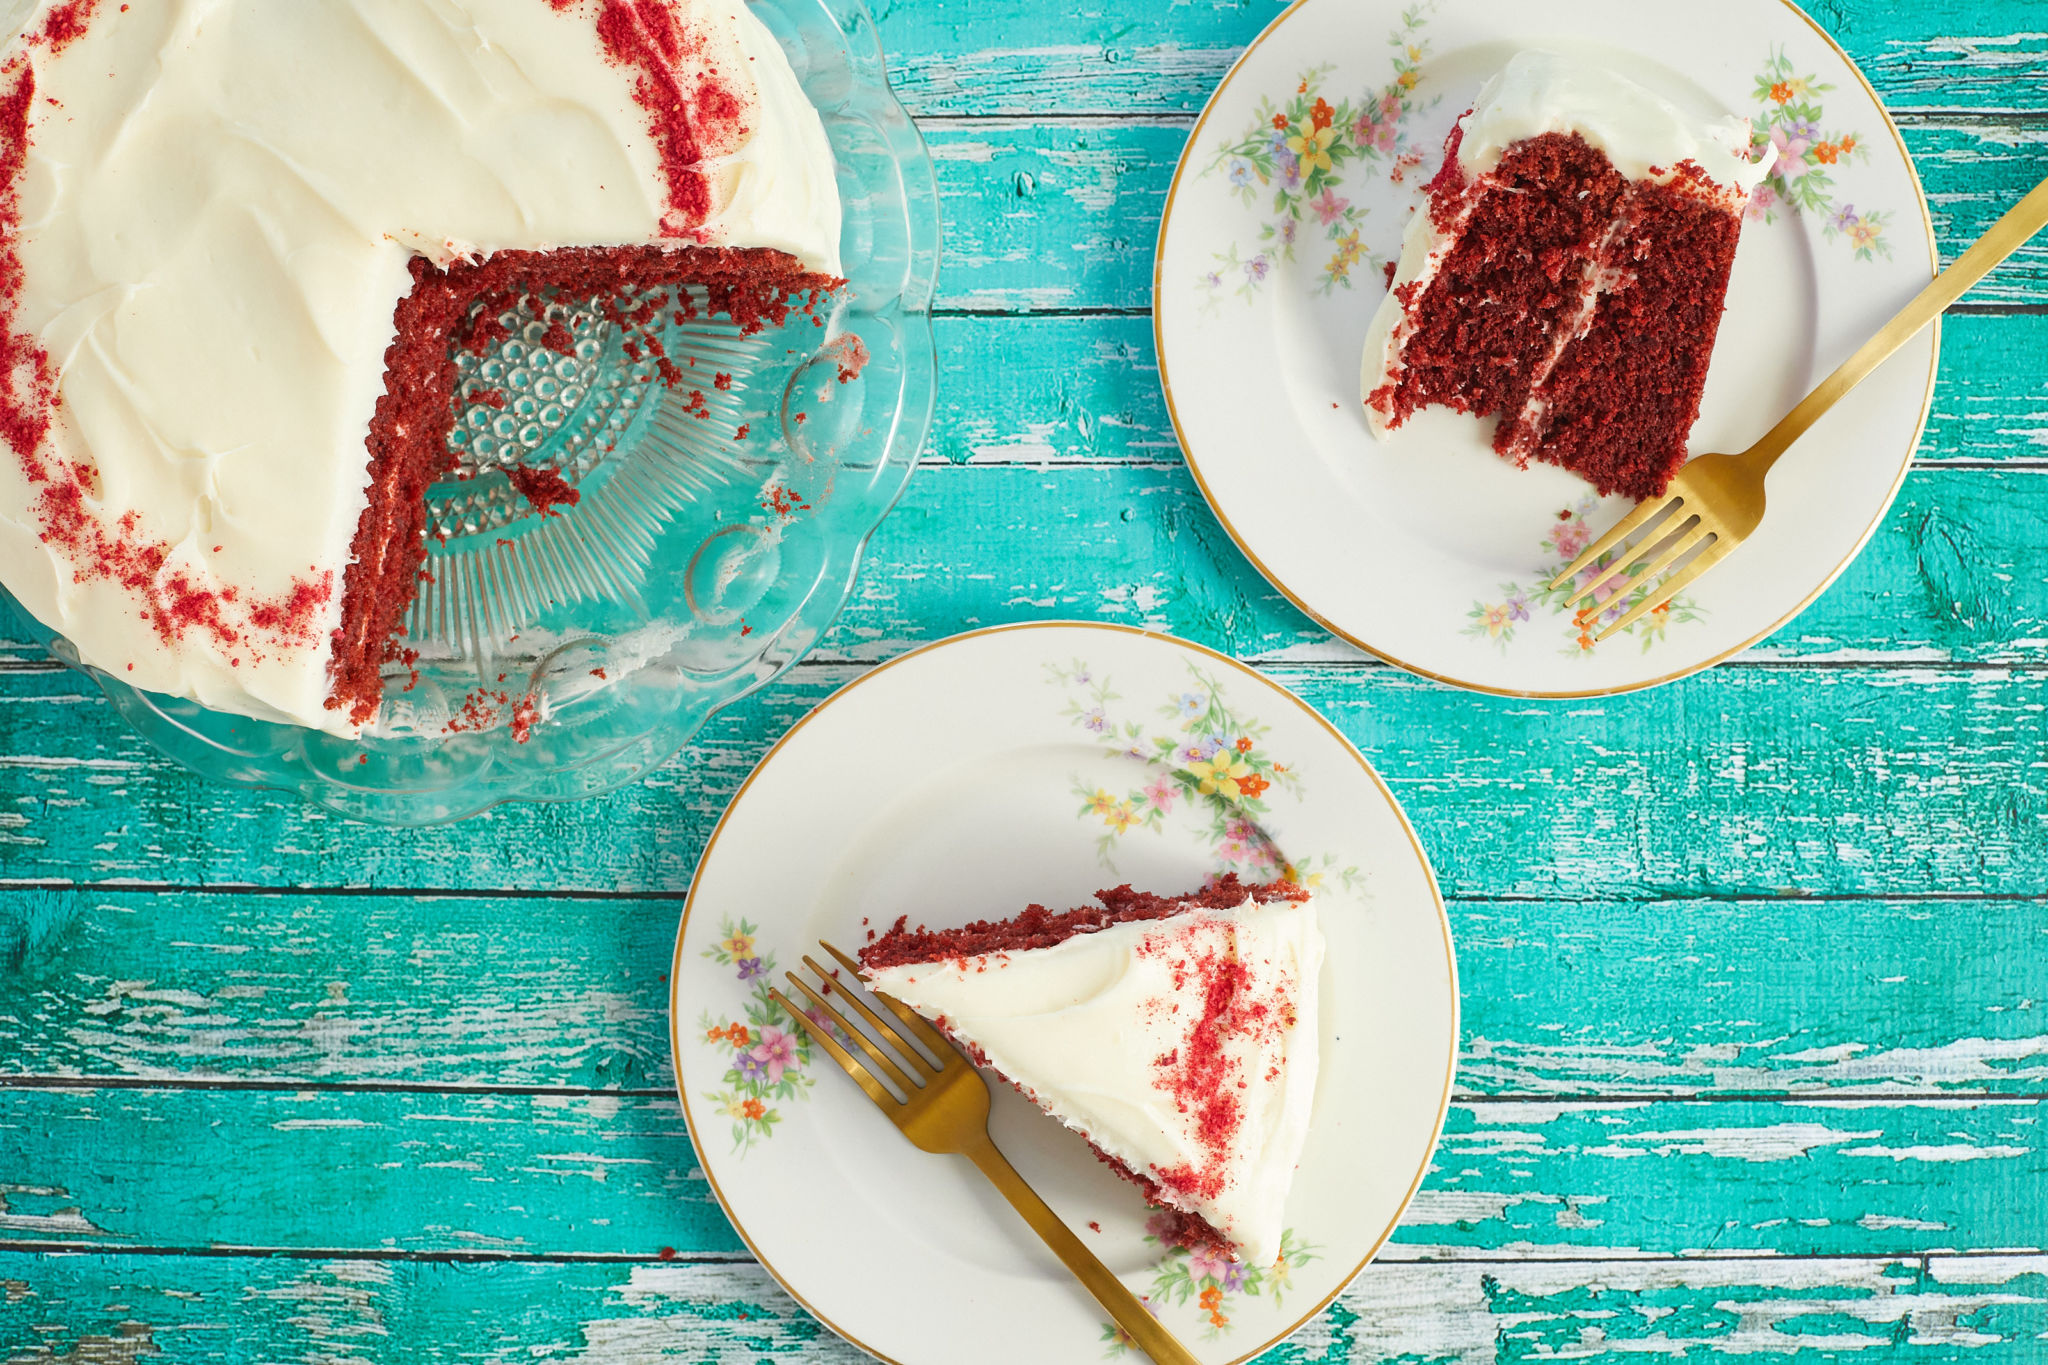 Gemma S Best Ever Red Velvet Cake With Ermine Frosting